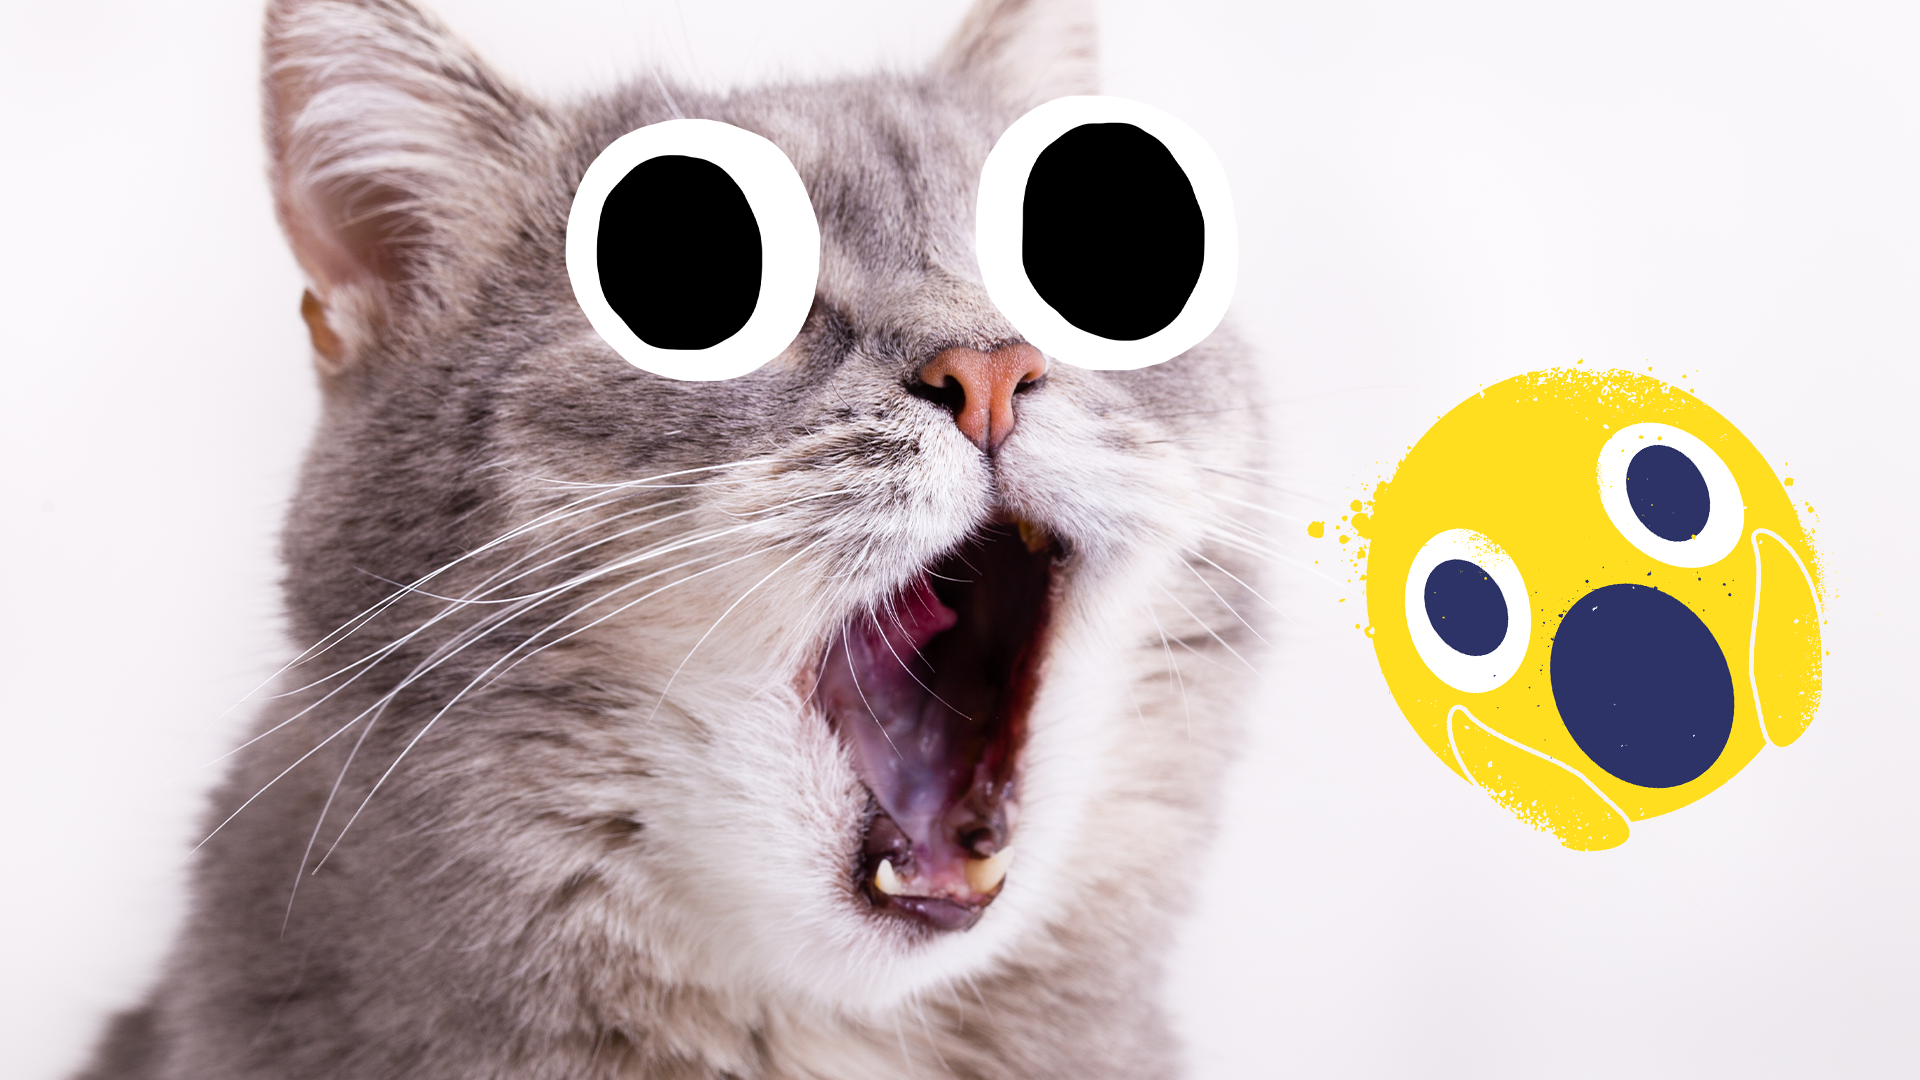 Cat and emoji both looking shocked